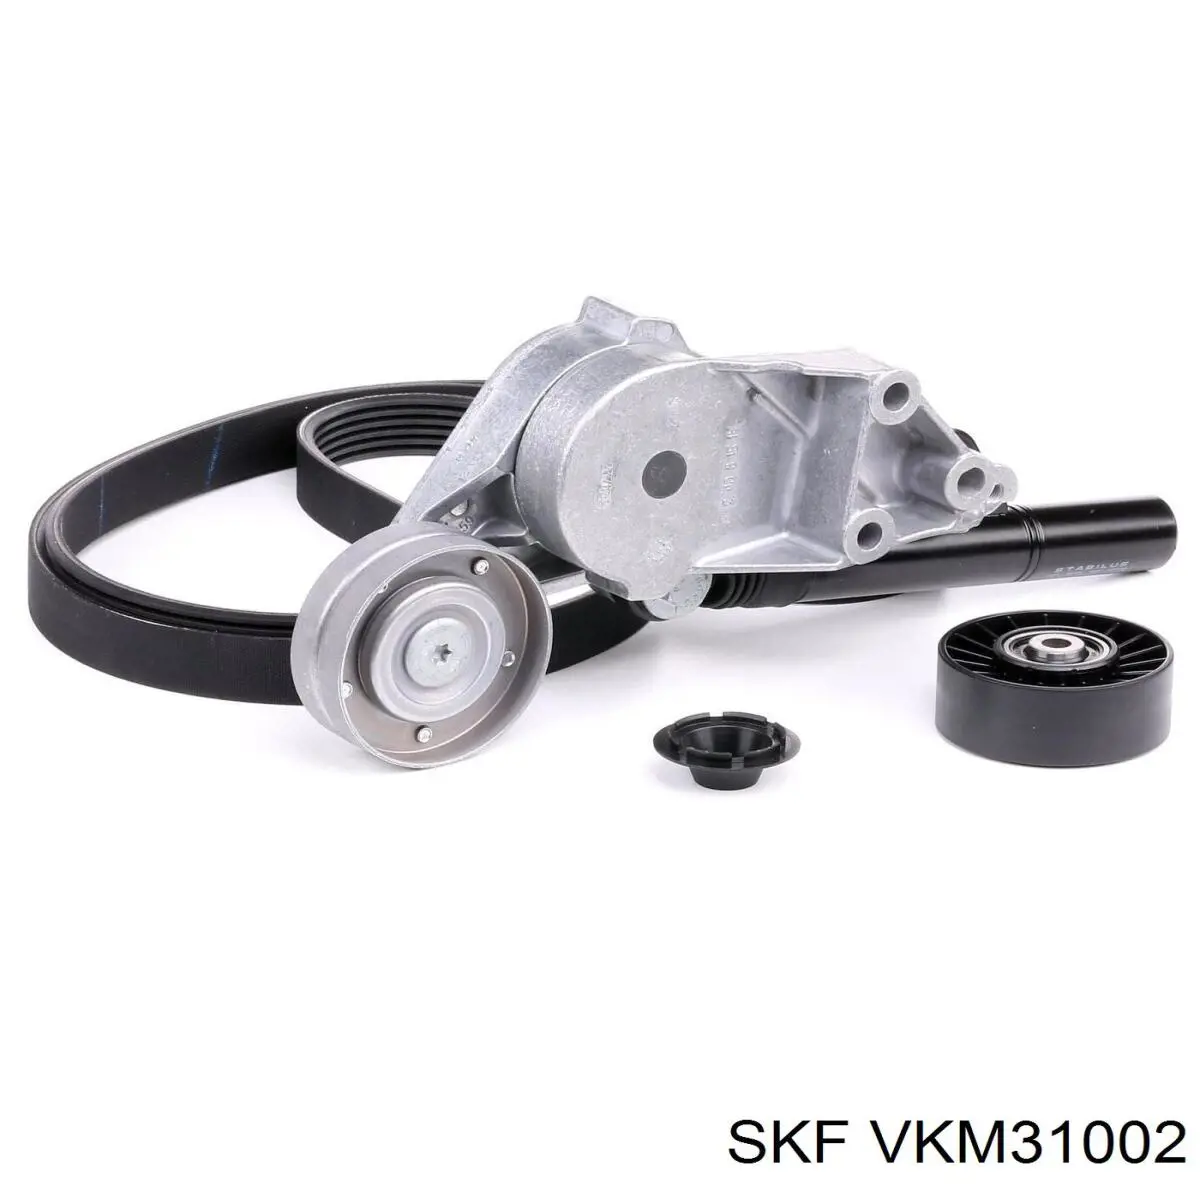 VKM 31002 SKF polea inversión / guía, correa poli v